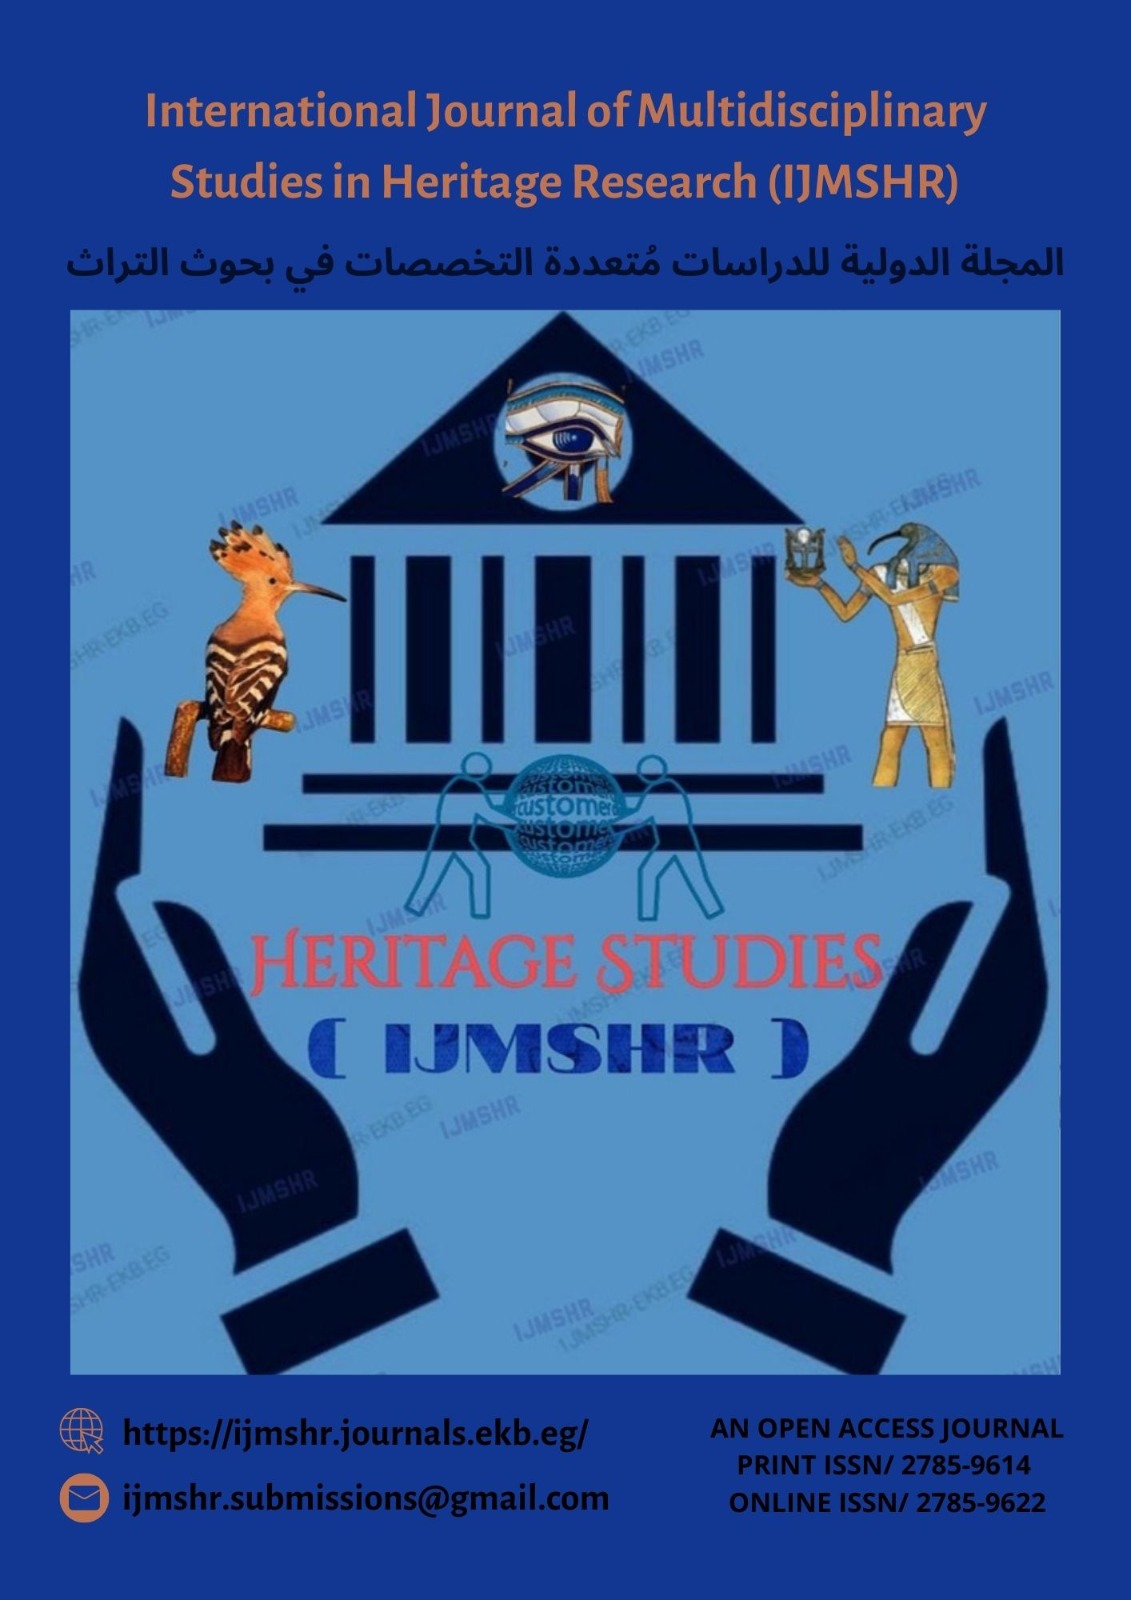 International Journal of Multidisciplinary Studies in Heritage Research